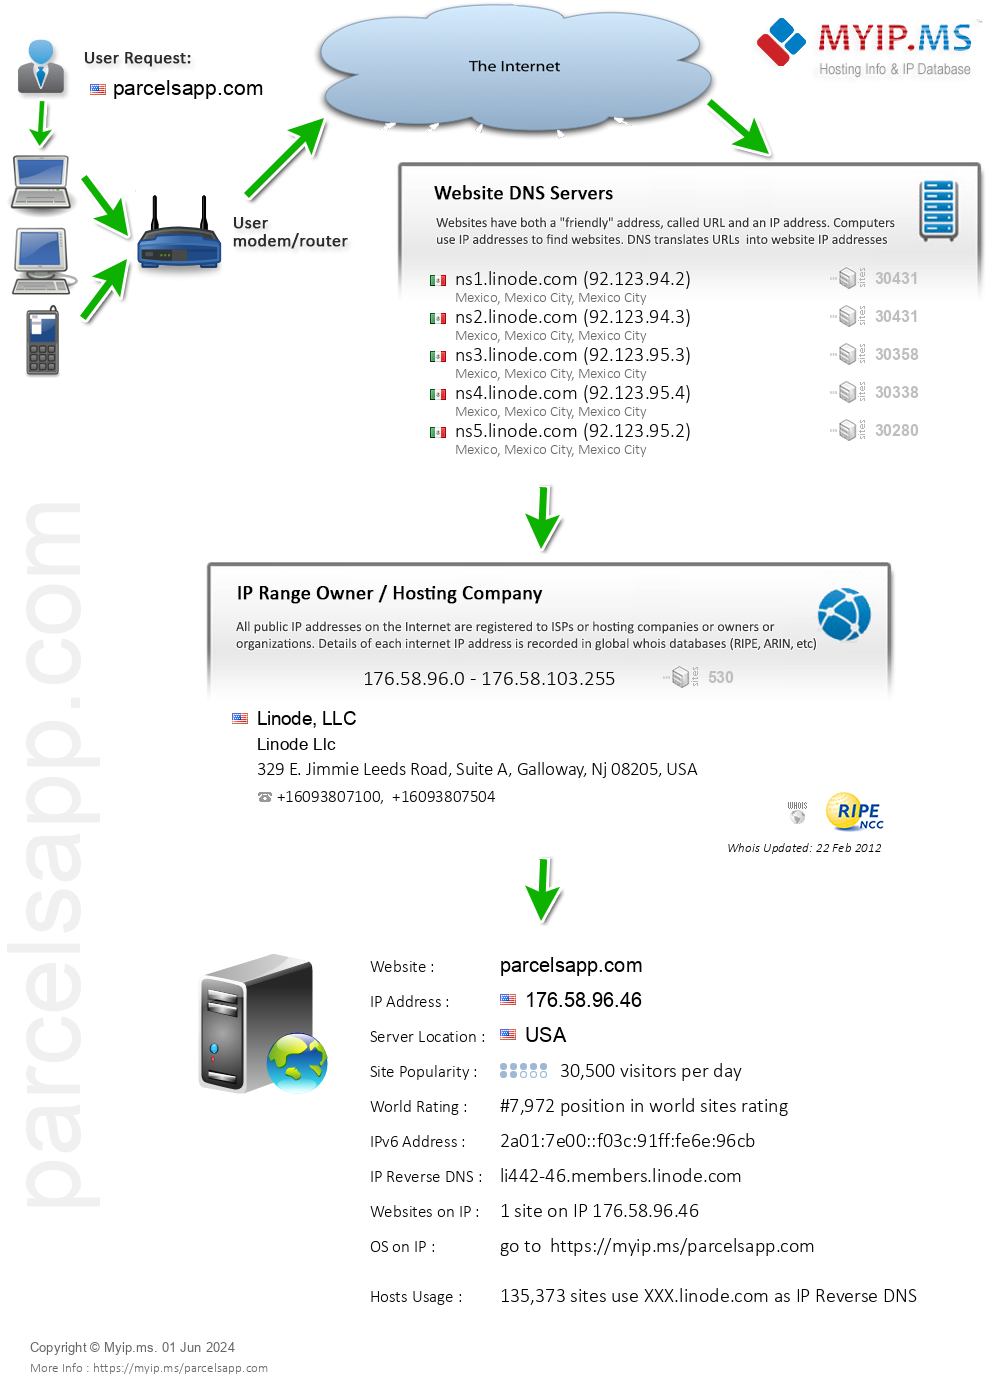 Parcelsapp.com - Website Hosting Visual IP Diagram